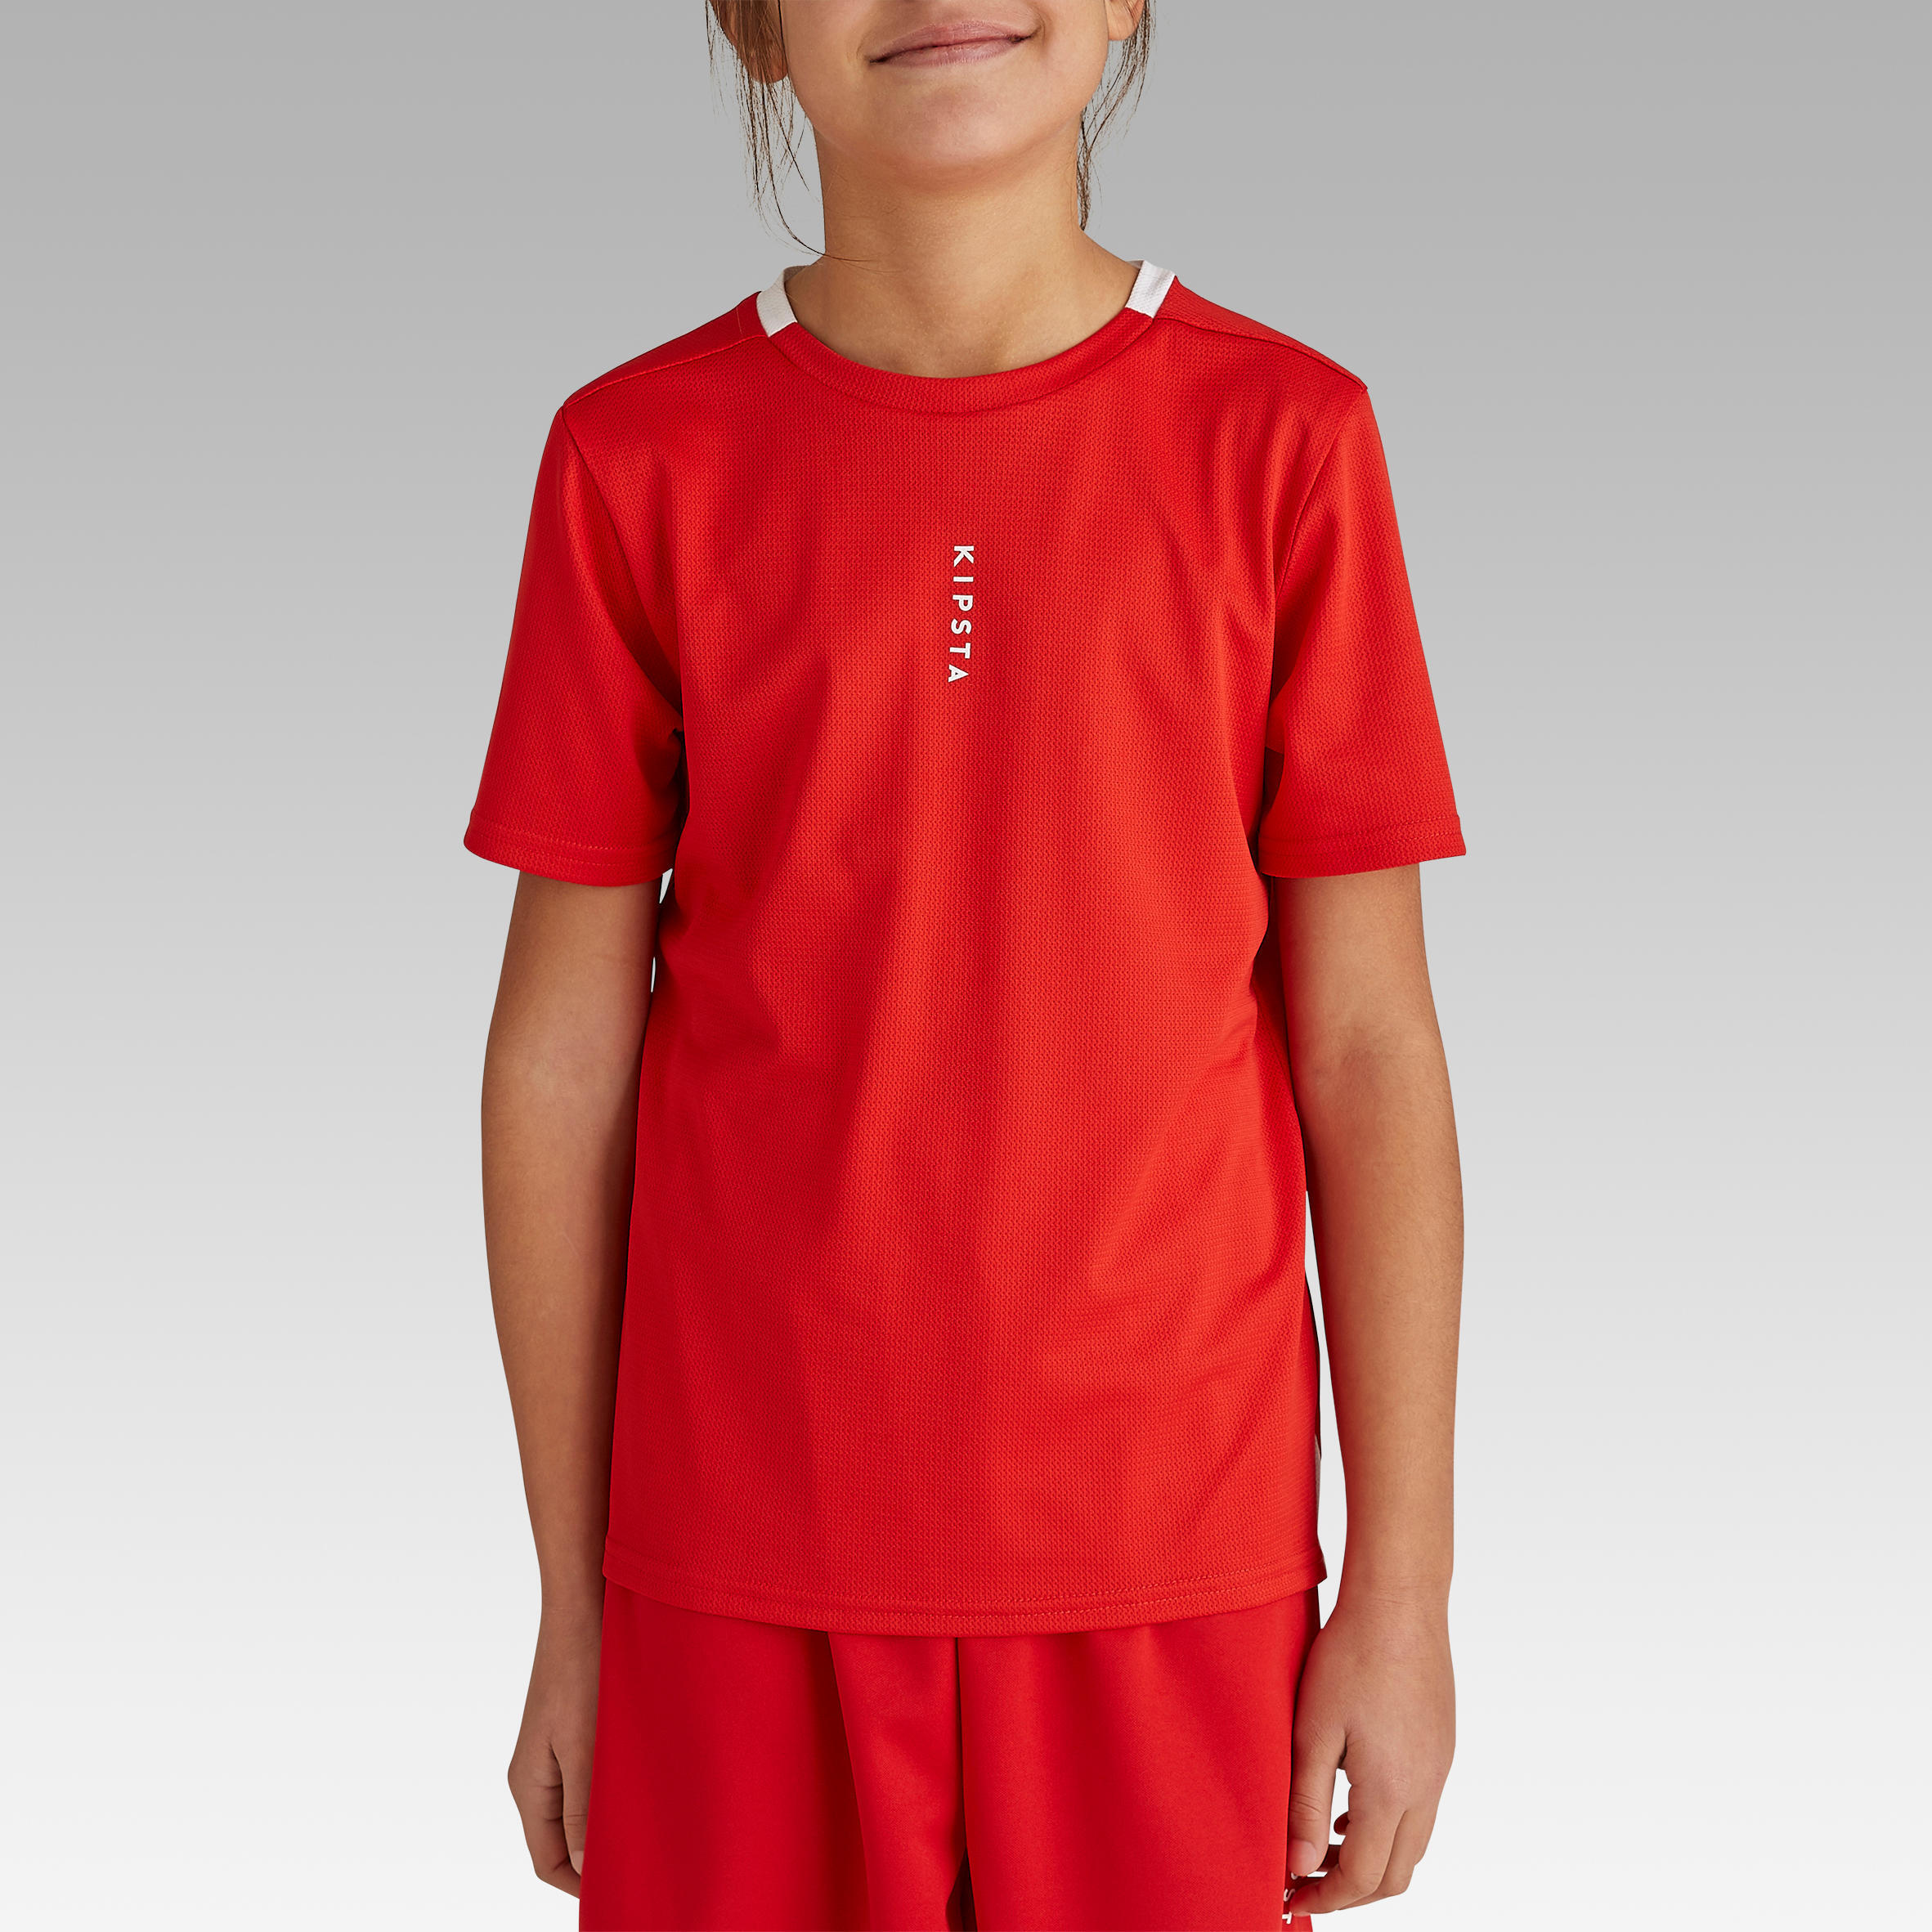 Kids' Football Shirt Essential - Red 2/8